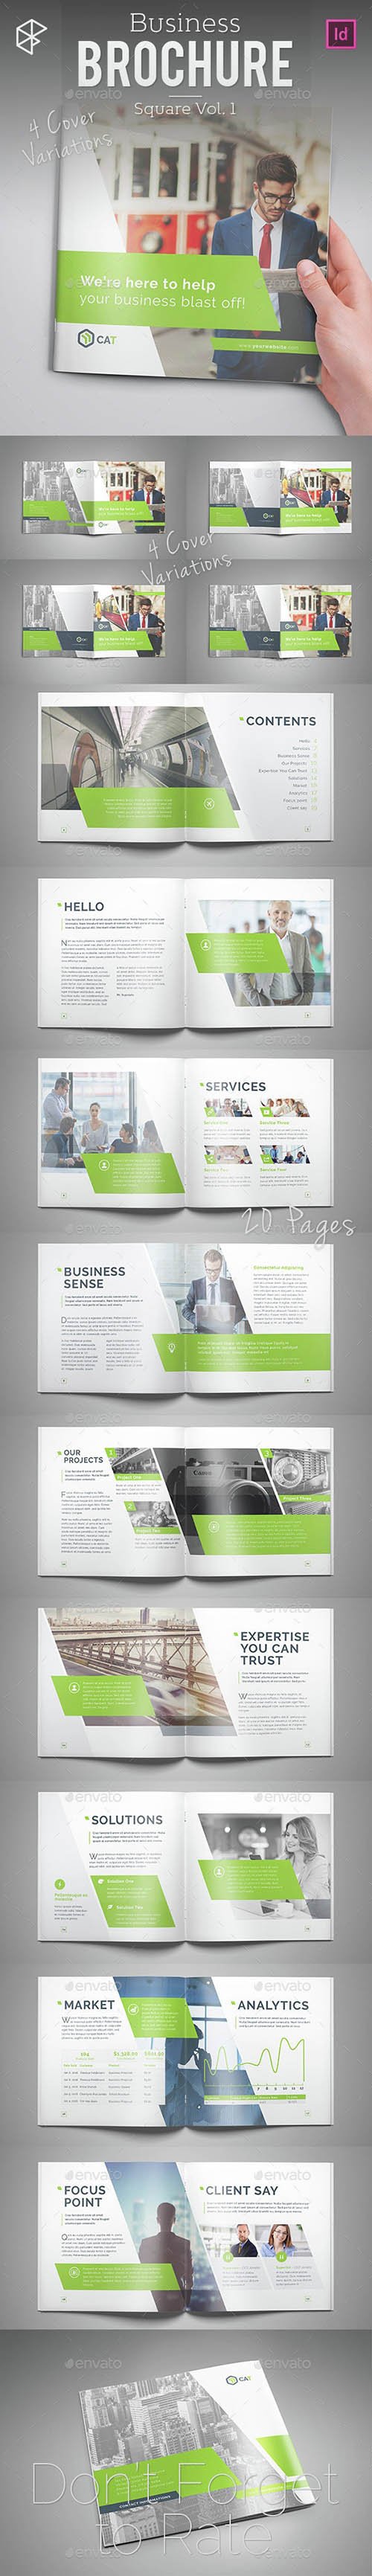 Business Brochure - Square Vol. 1 14723573